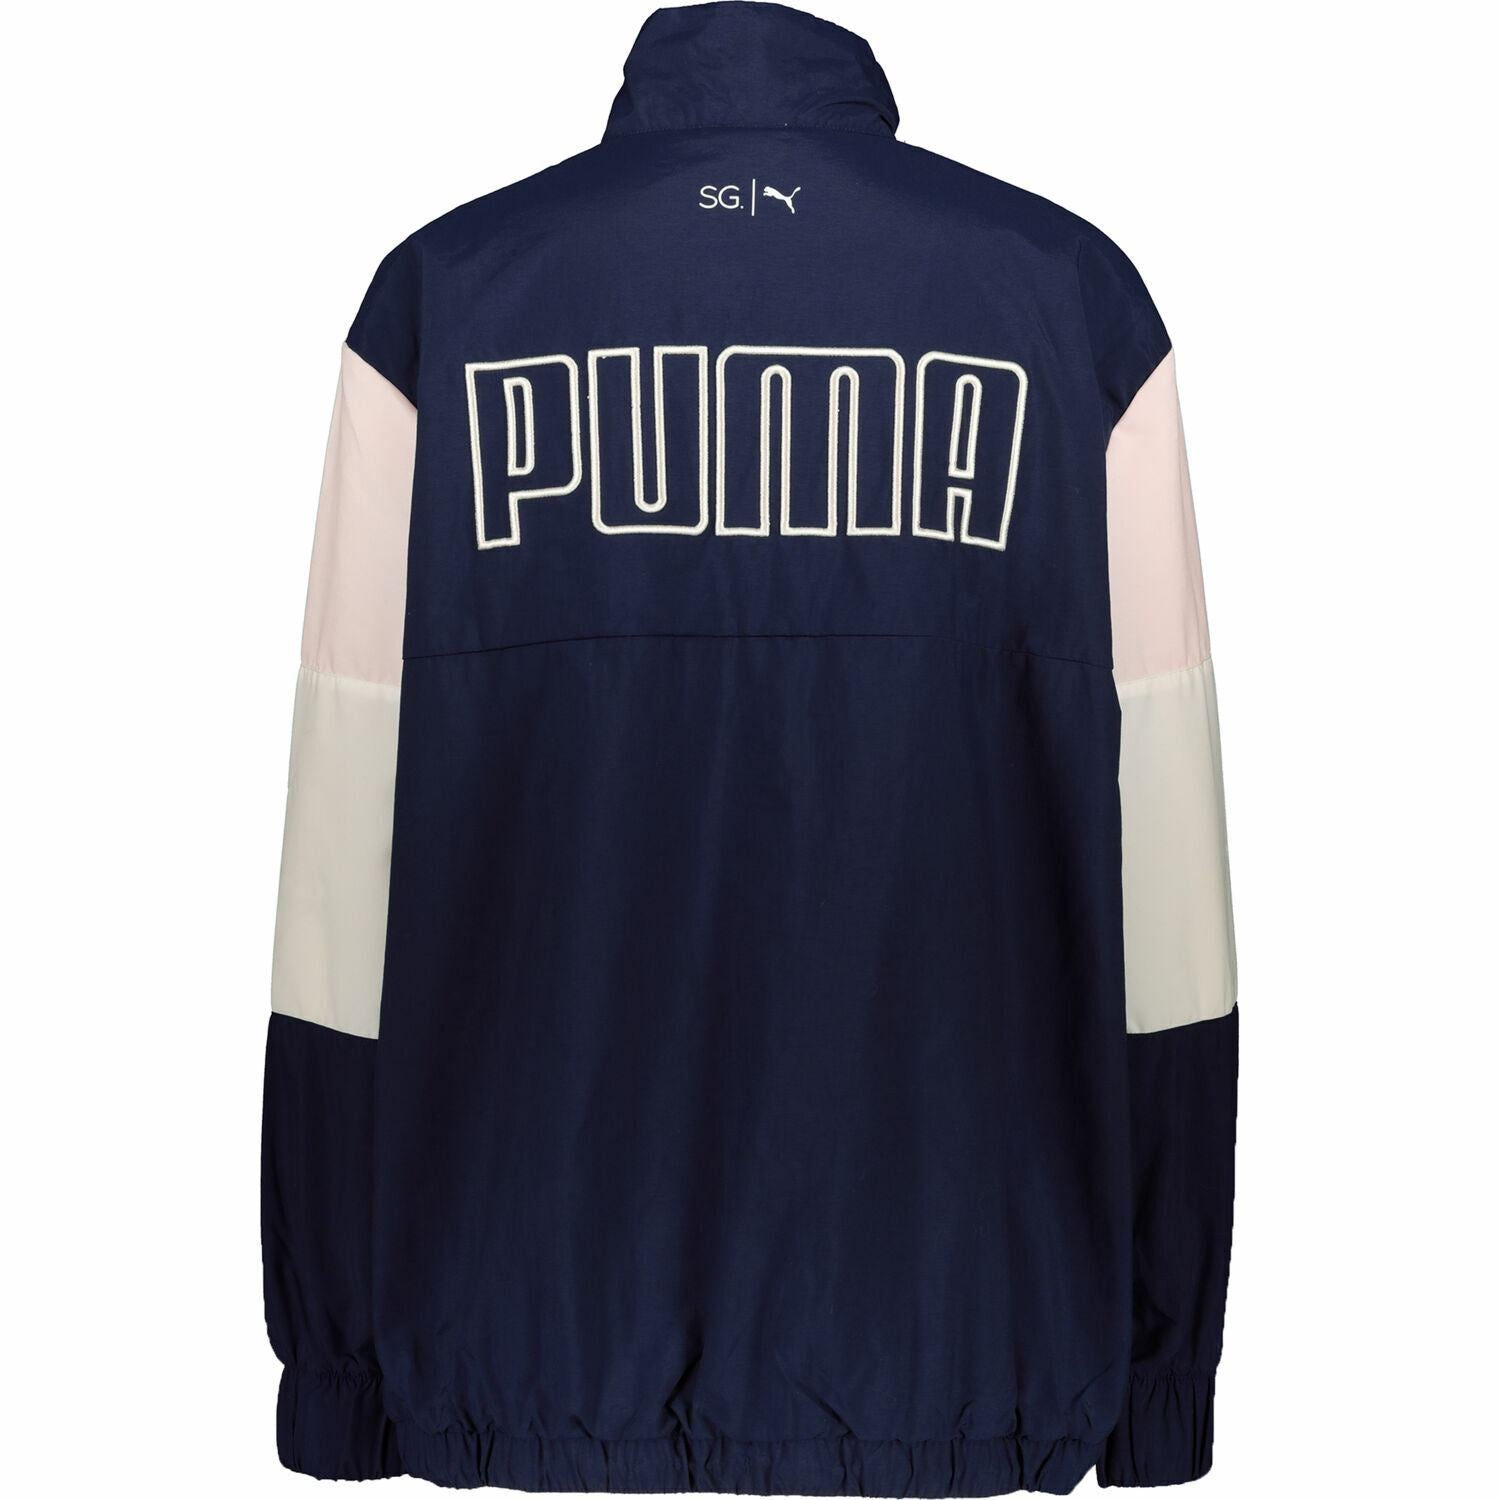 PUMA X SG Selena Gomez Women's Lightweight Jacket, Navy Blue/White/Pink size XS